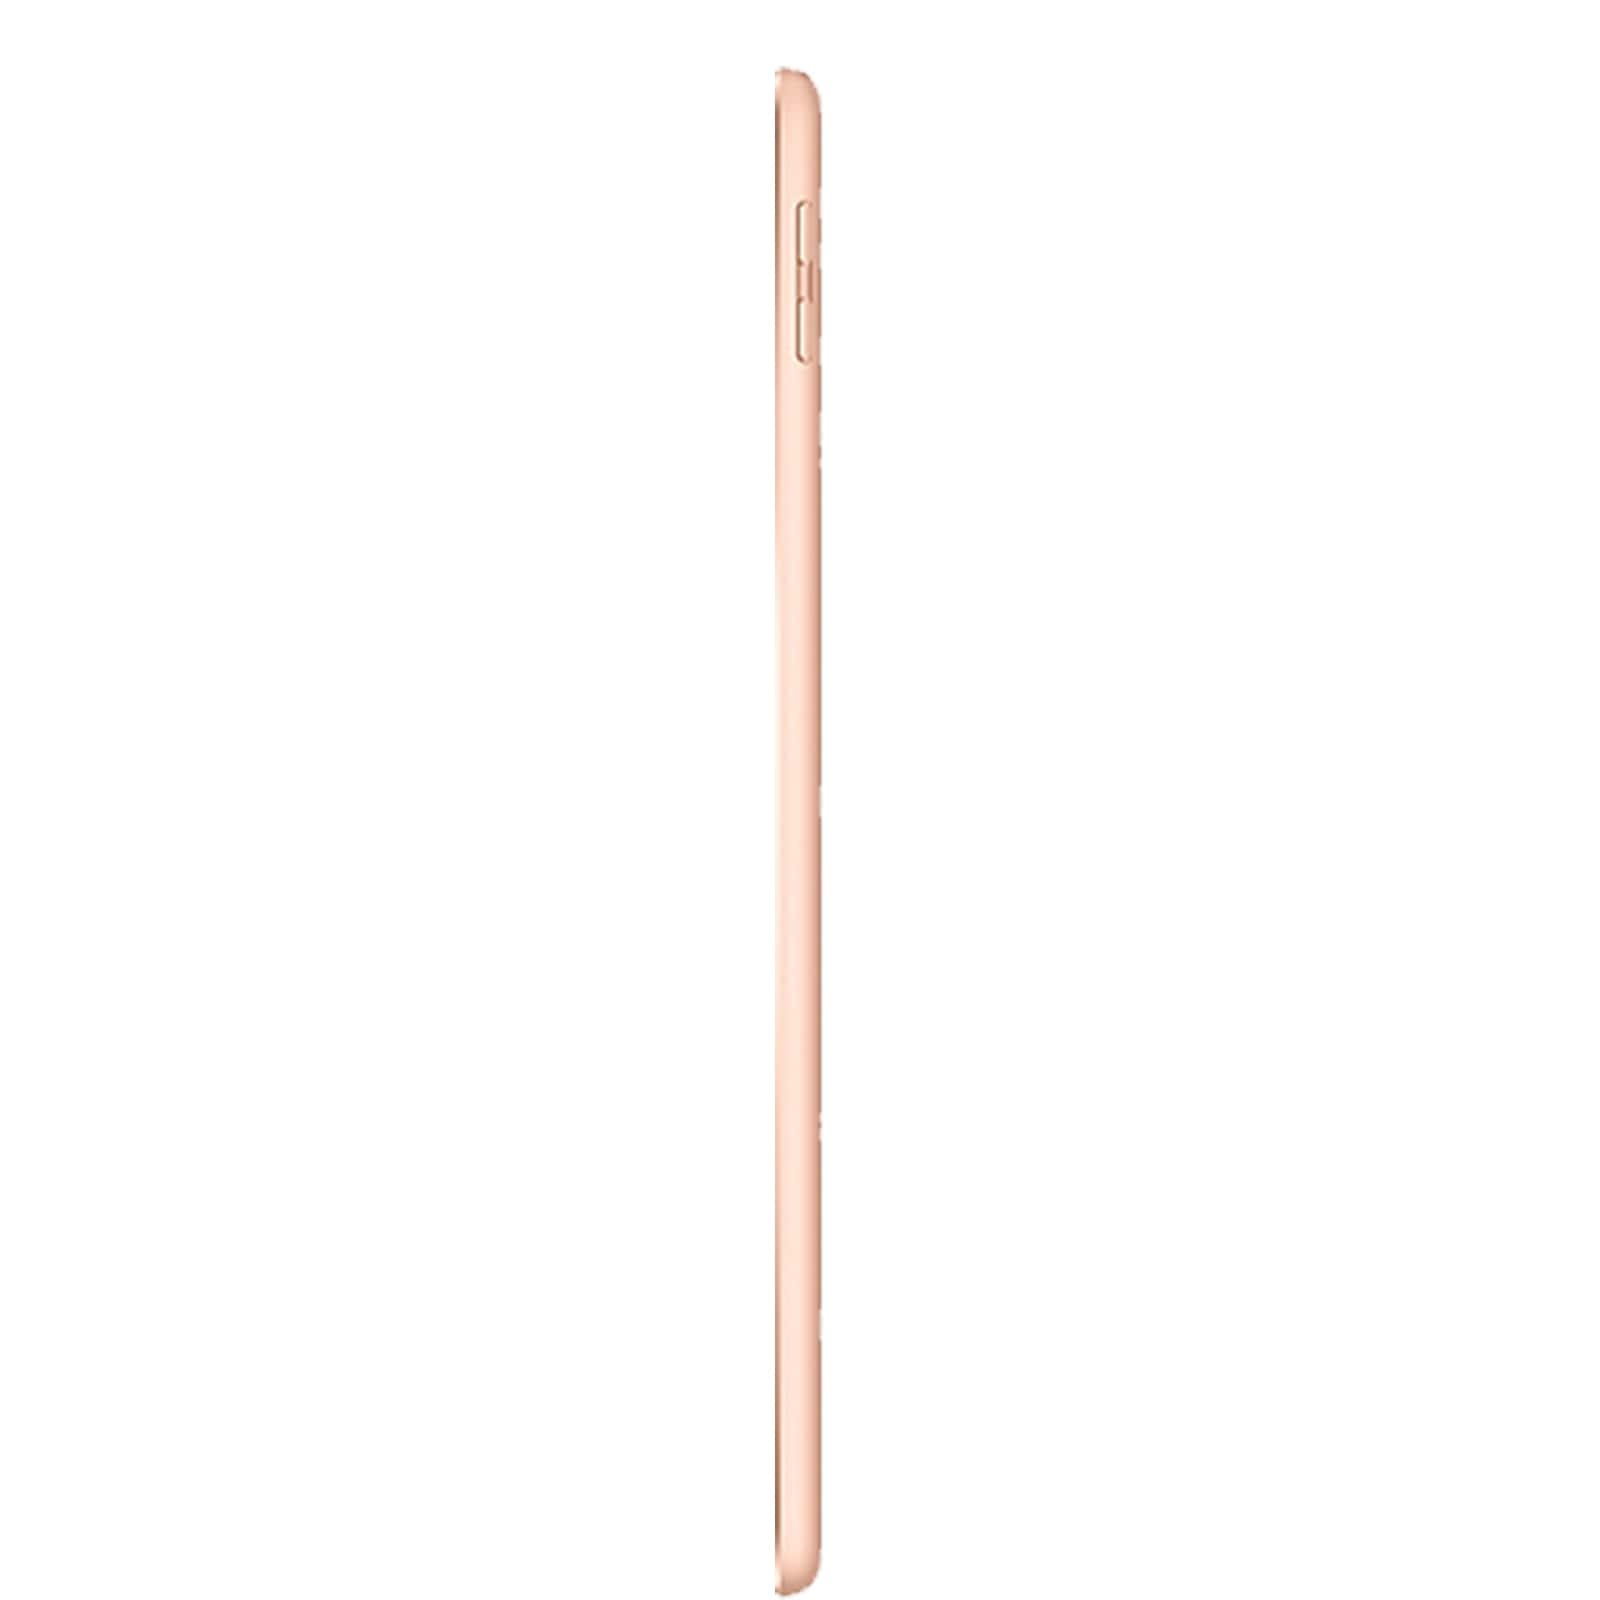 Apple iPad 6 128GB WiFi & Cellular Gold - Good